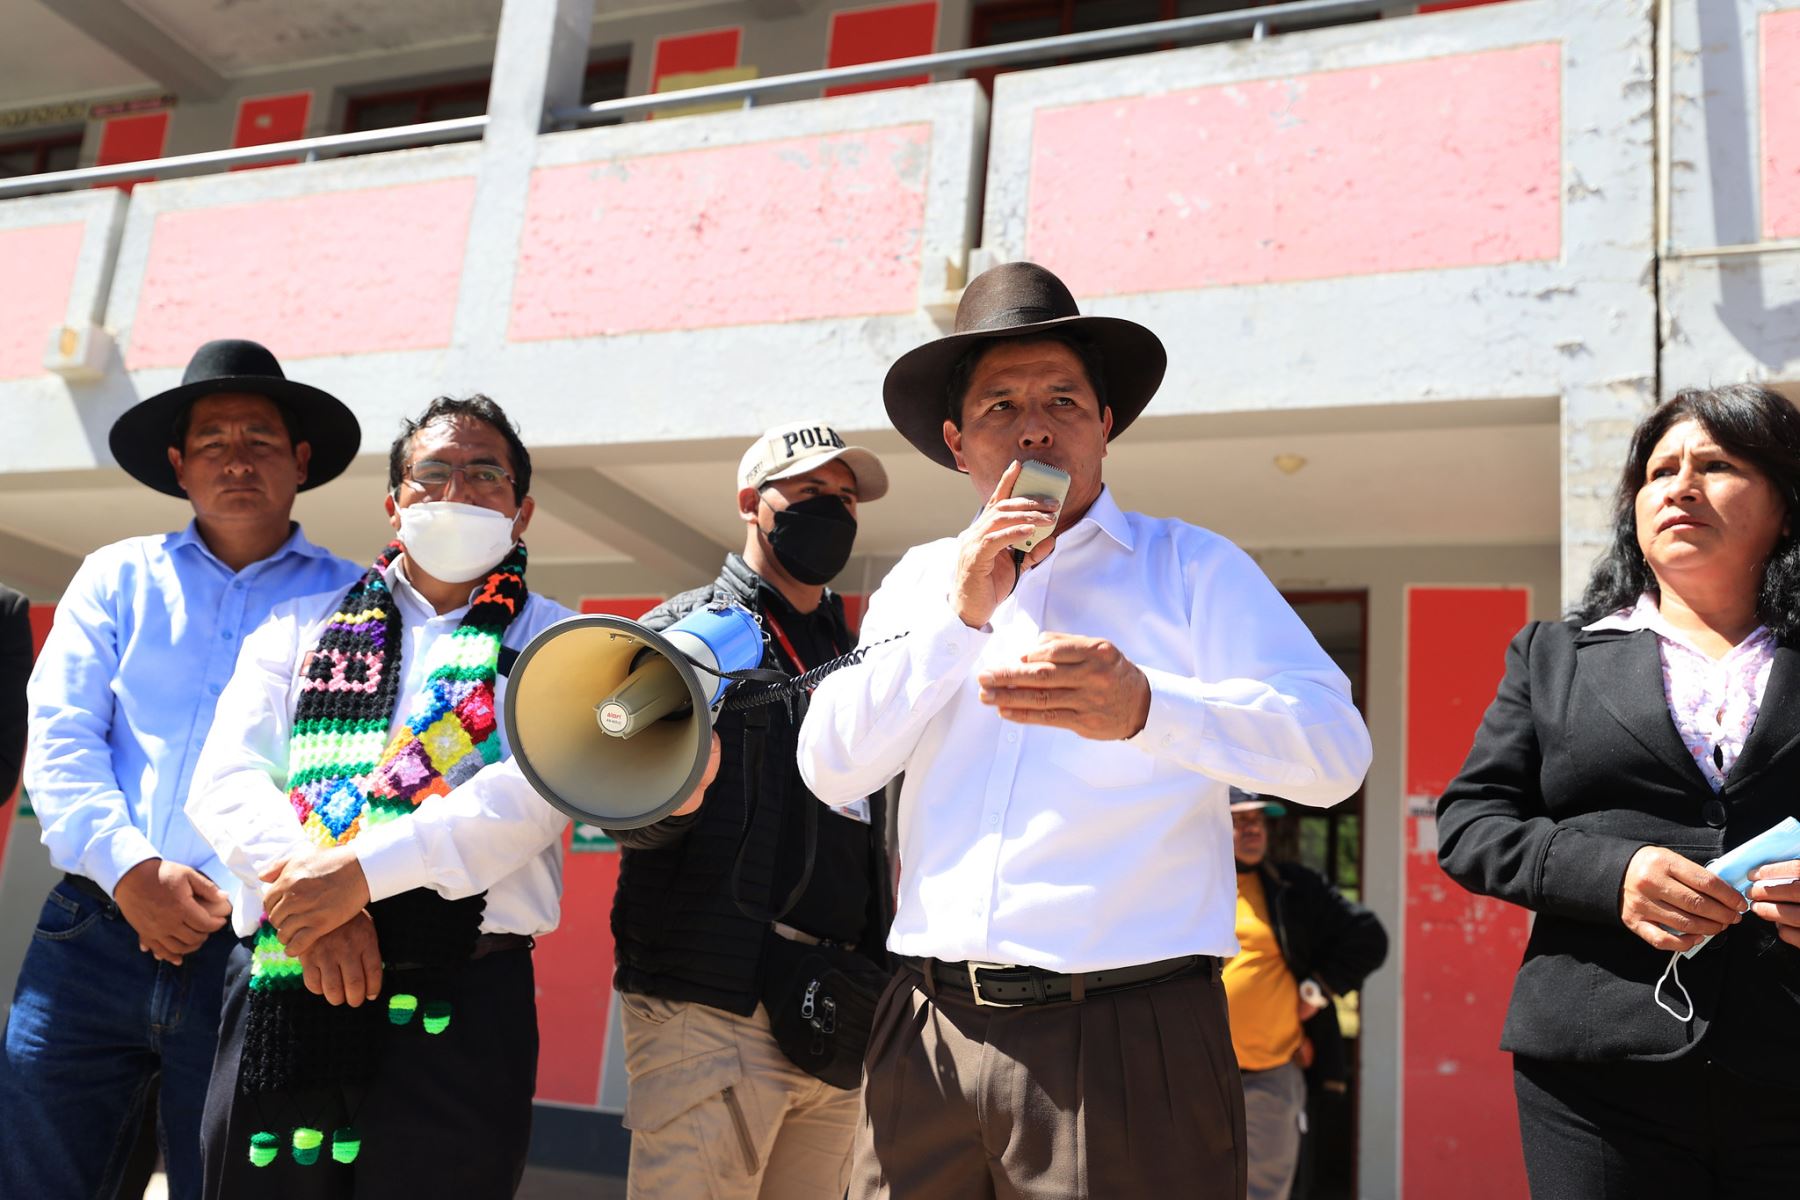 Presidente Pedro Castillo inspecciona la I.E Mariscal Cáceres de la provincia de Tayacaja en Huancavelica.
Foto: ANDINA/Prensa Presidencia